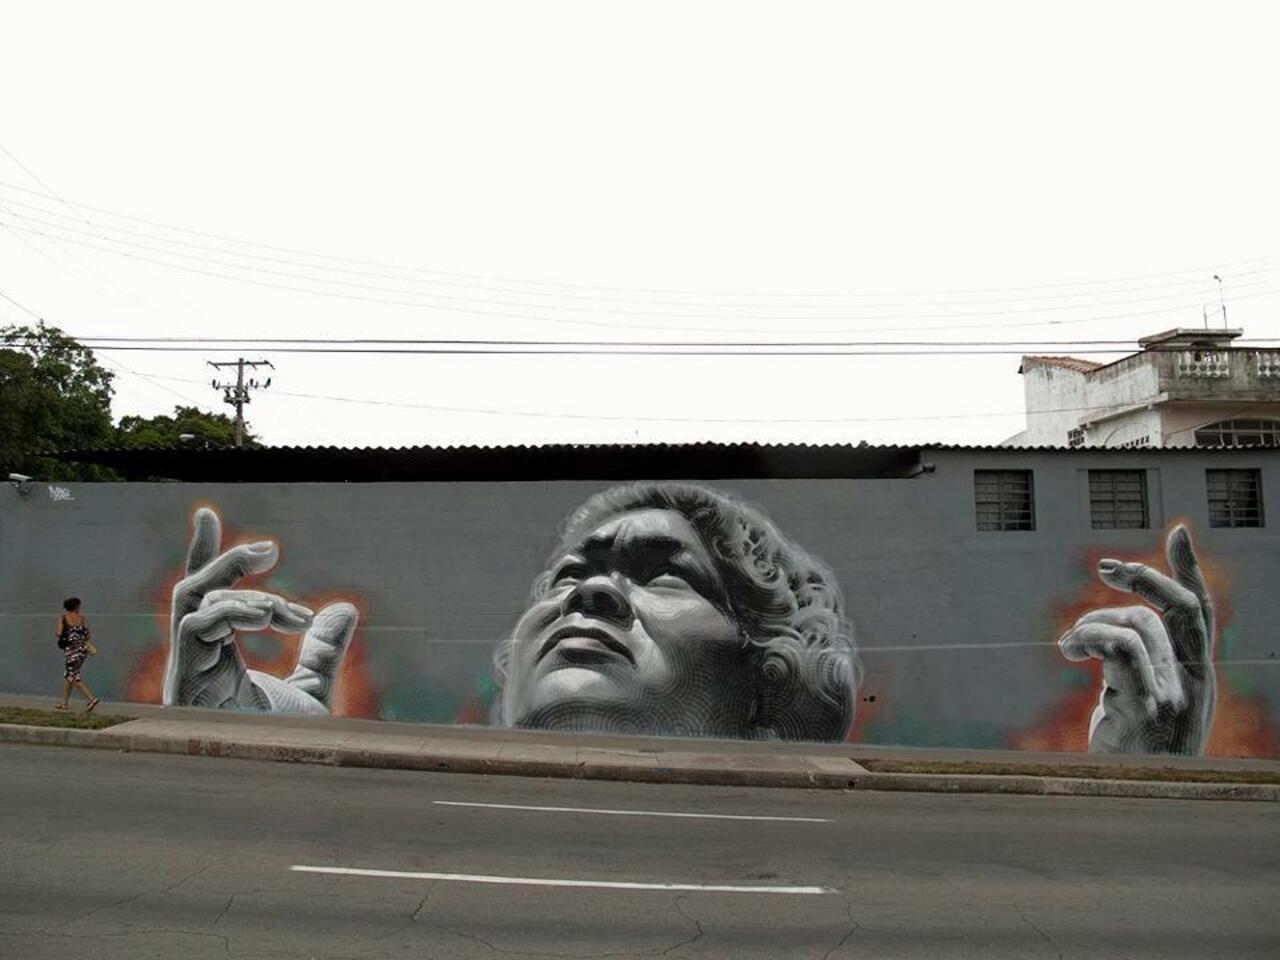 Artist 'El Mac' new Street Art mural located in Havana, Cuba #art #mural #graffiti #streetart http://t.co/TcfFd6T5n3